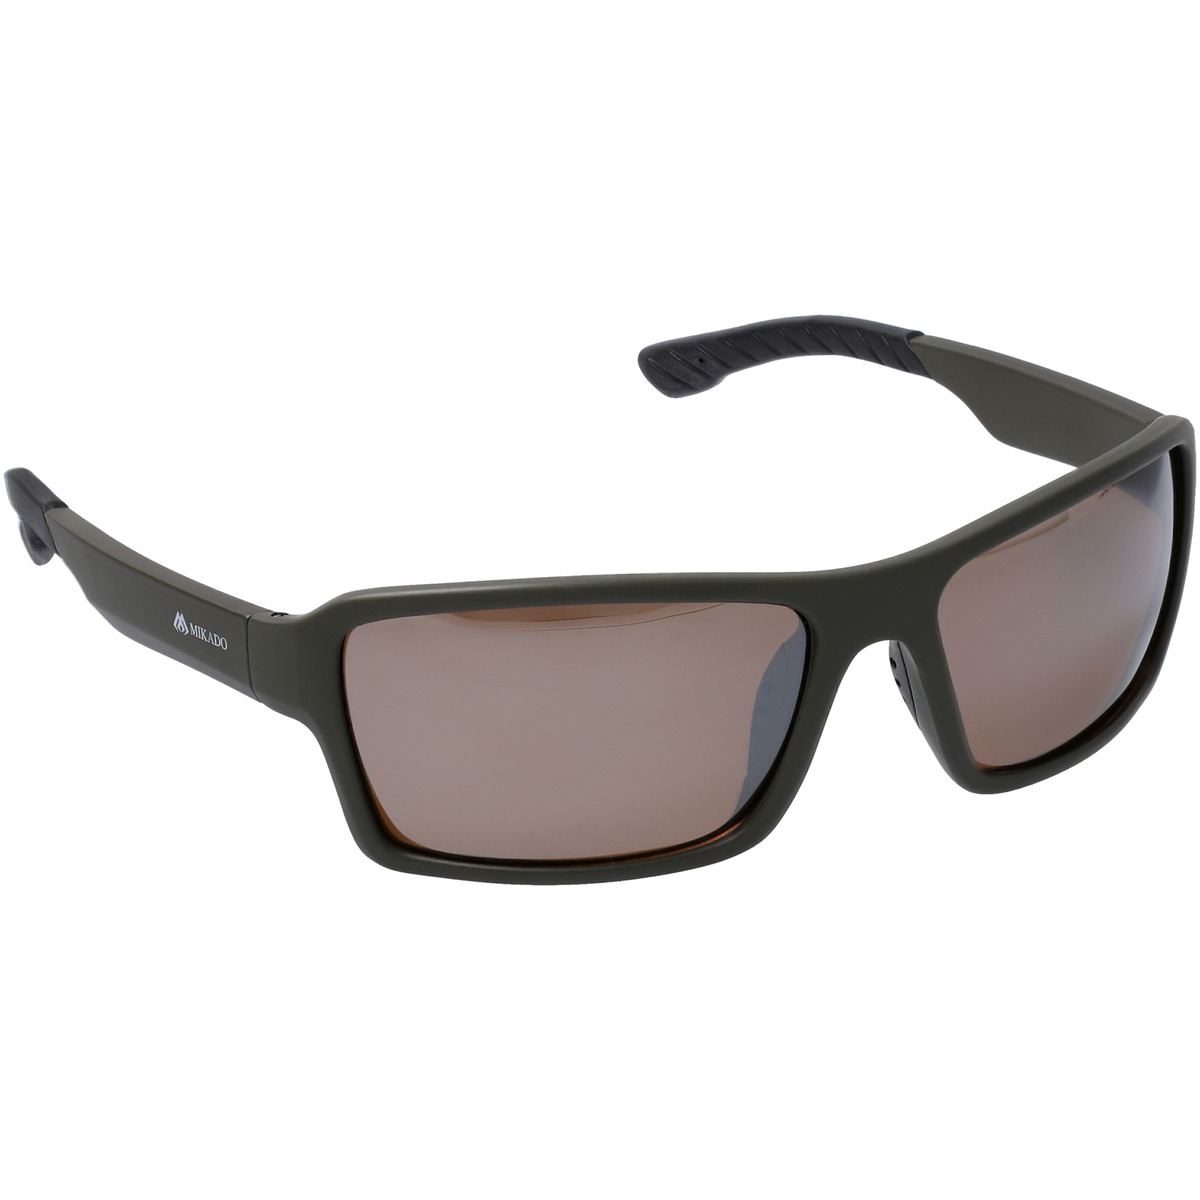 Mikado Sunglasses Polarized - 244 BROWN WITH MIRROR EFFECT